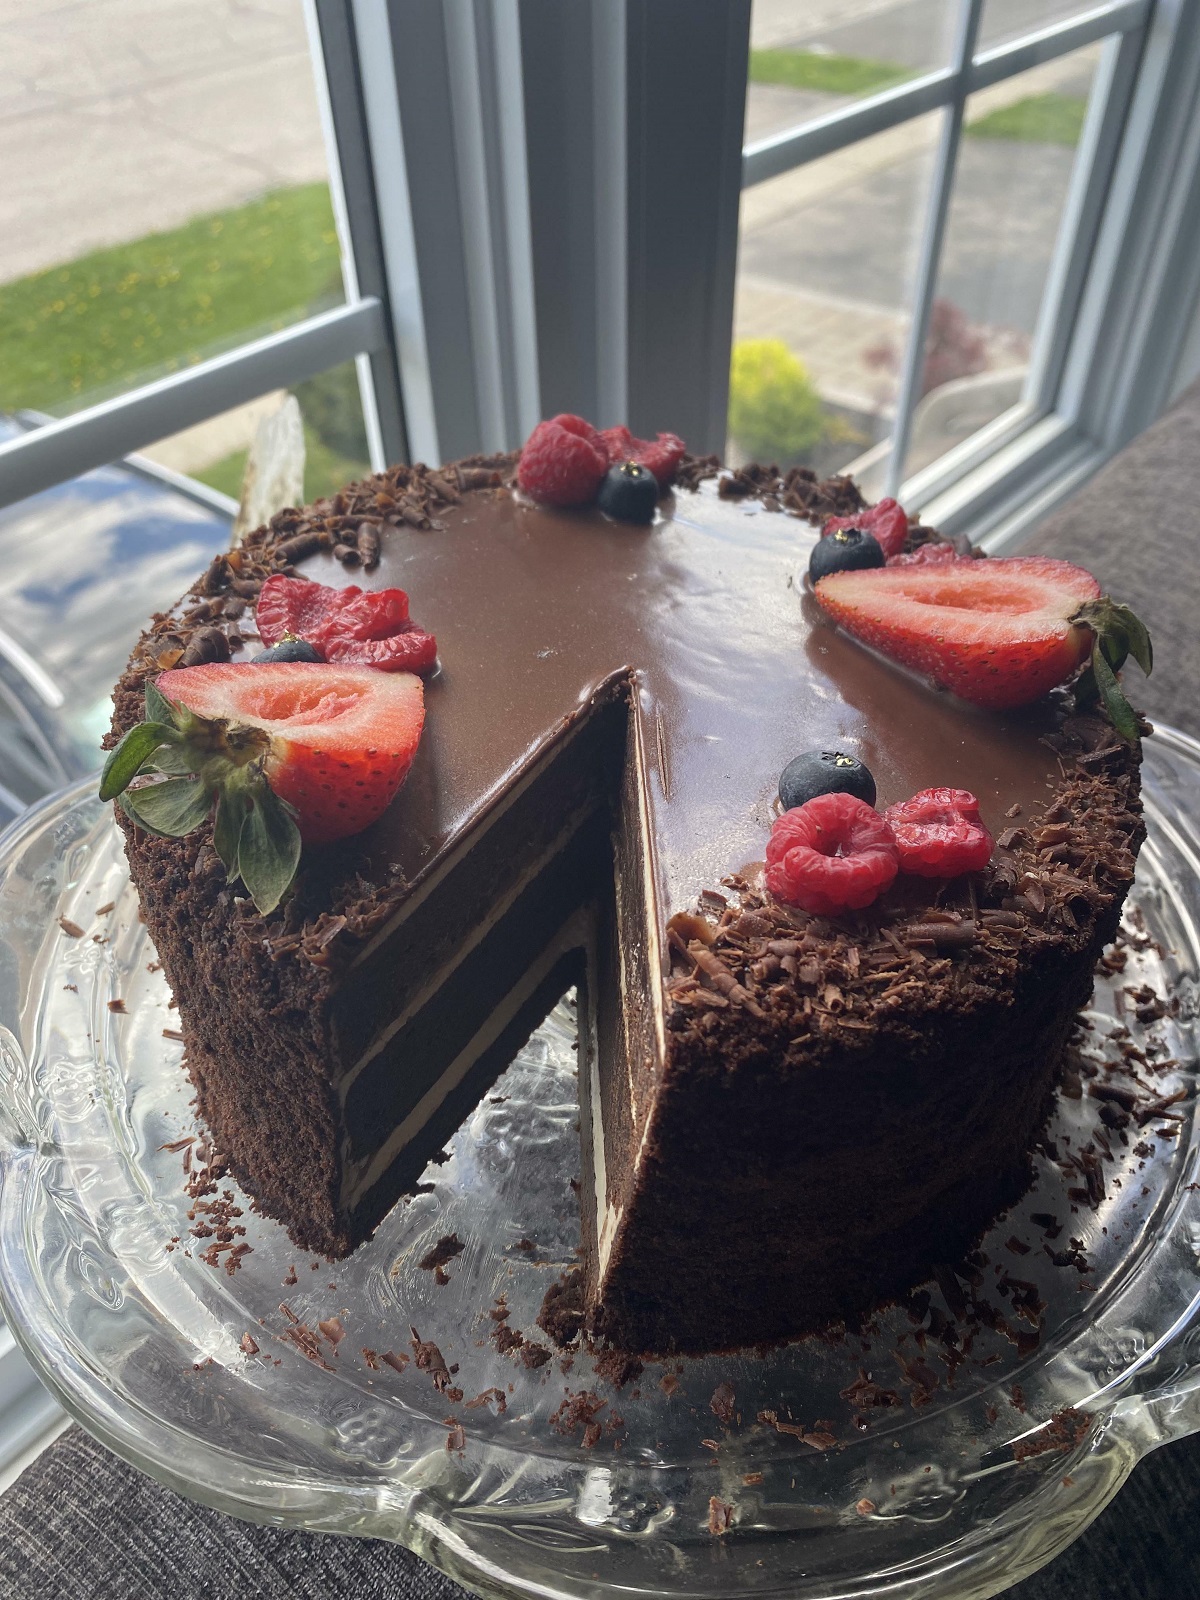 I Made My Birthday Cake! It's A Chocolate Espresso Cake With A Chocolate Cremeux, Espresso Swiss Meringue Buttercream, And A Dark Chocolate Glaze!